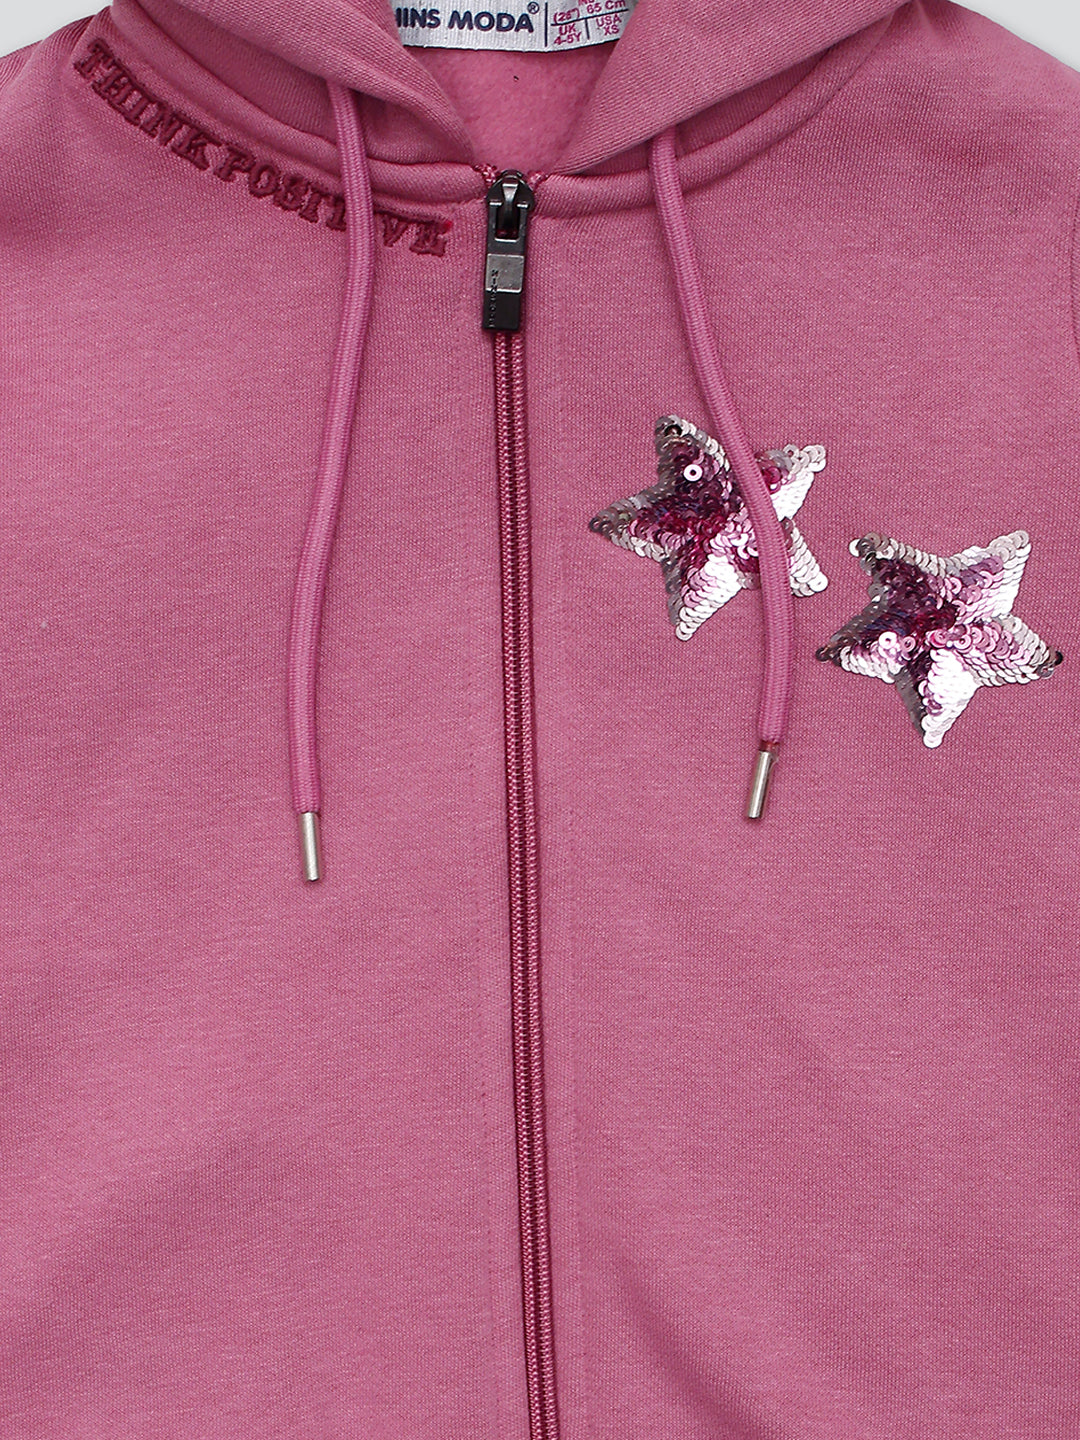 Pampolina Girls Sequined Printed Hoddie Sweatshirt - O.Pink